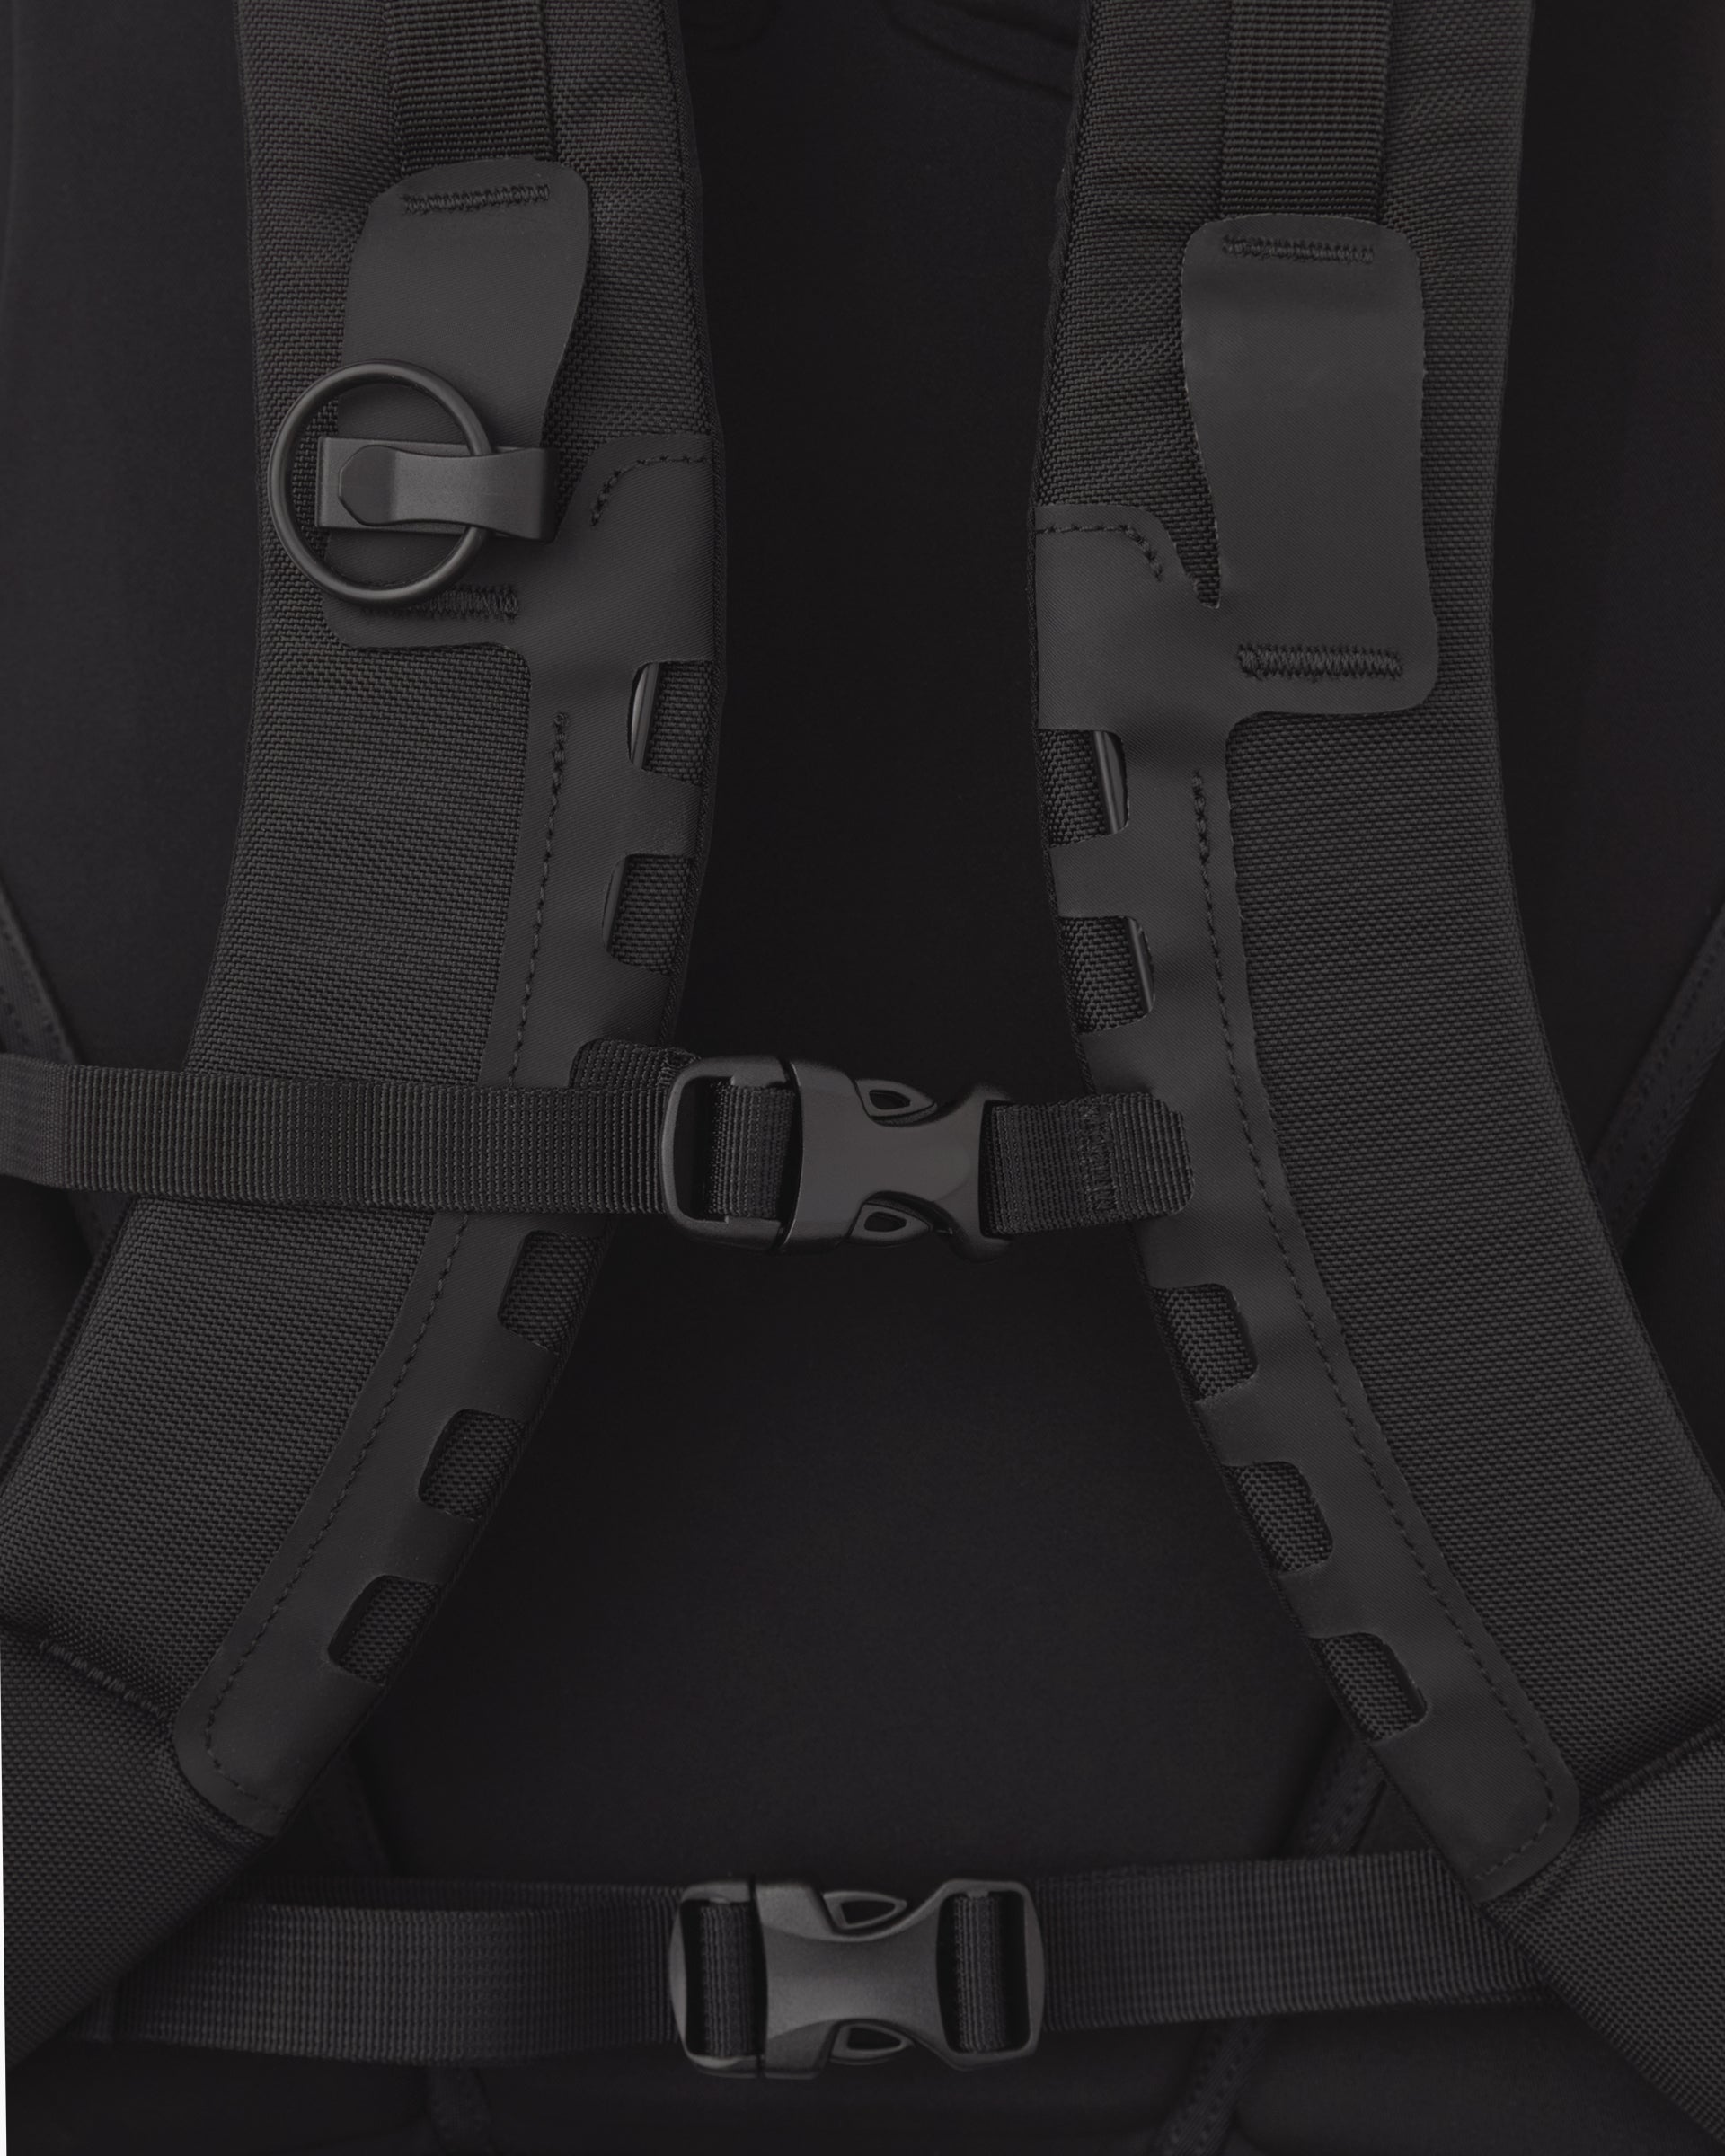 Arro 22 Backpack 24K Black